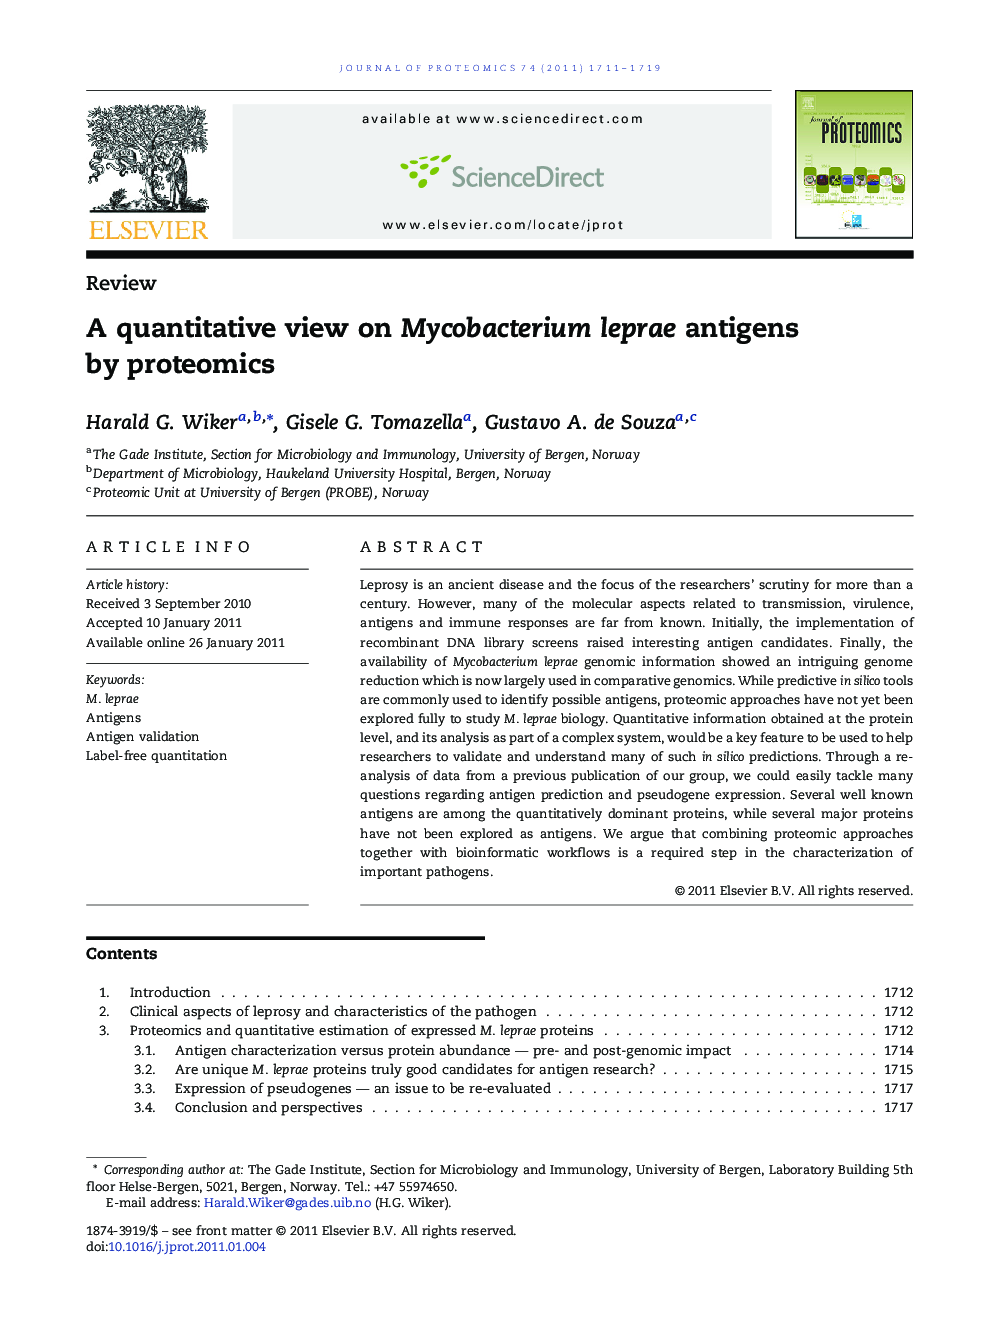 A quantitative view on Mycobacterium leprae antigens by proteomics